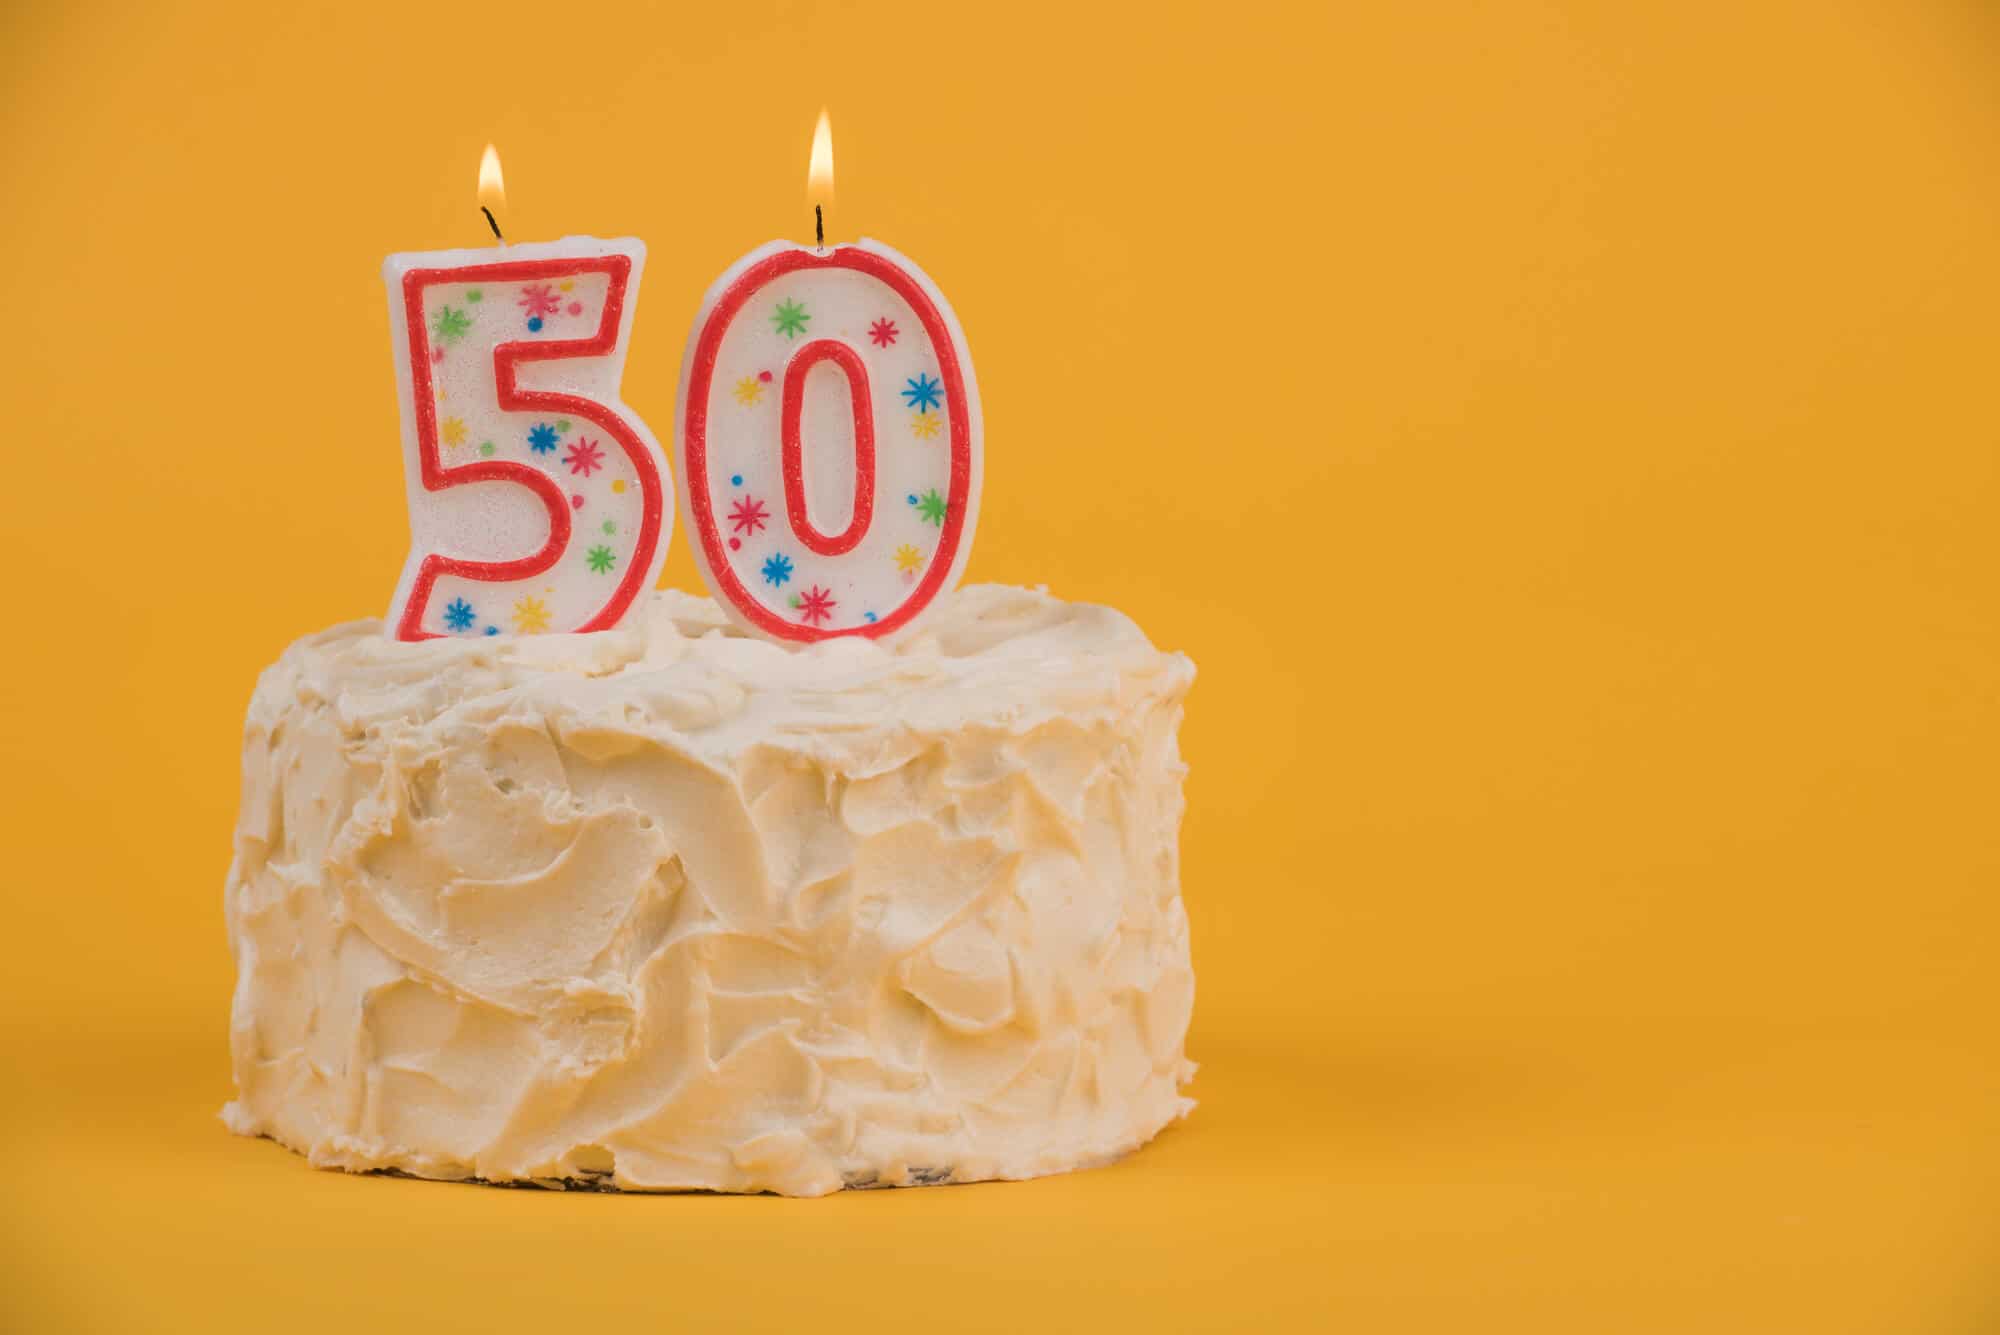 Gave 50 års fødselsdag 50